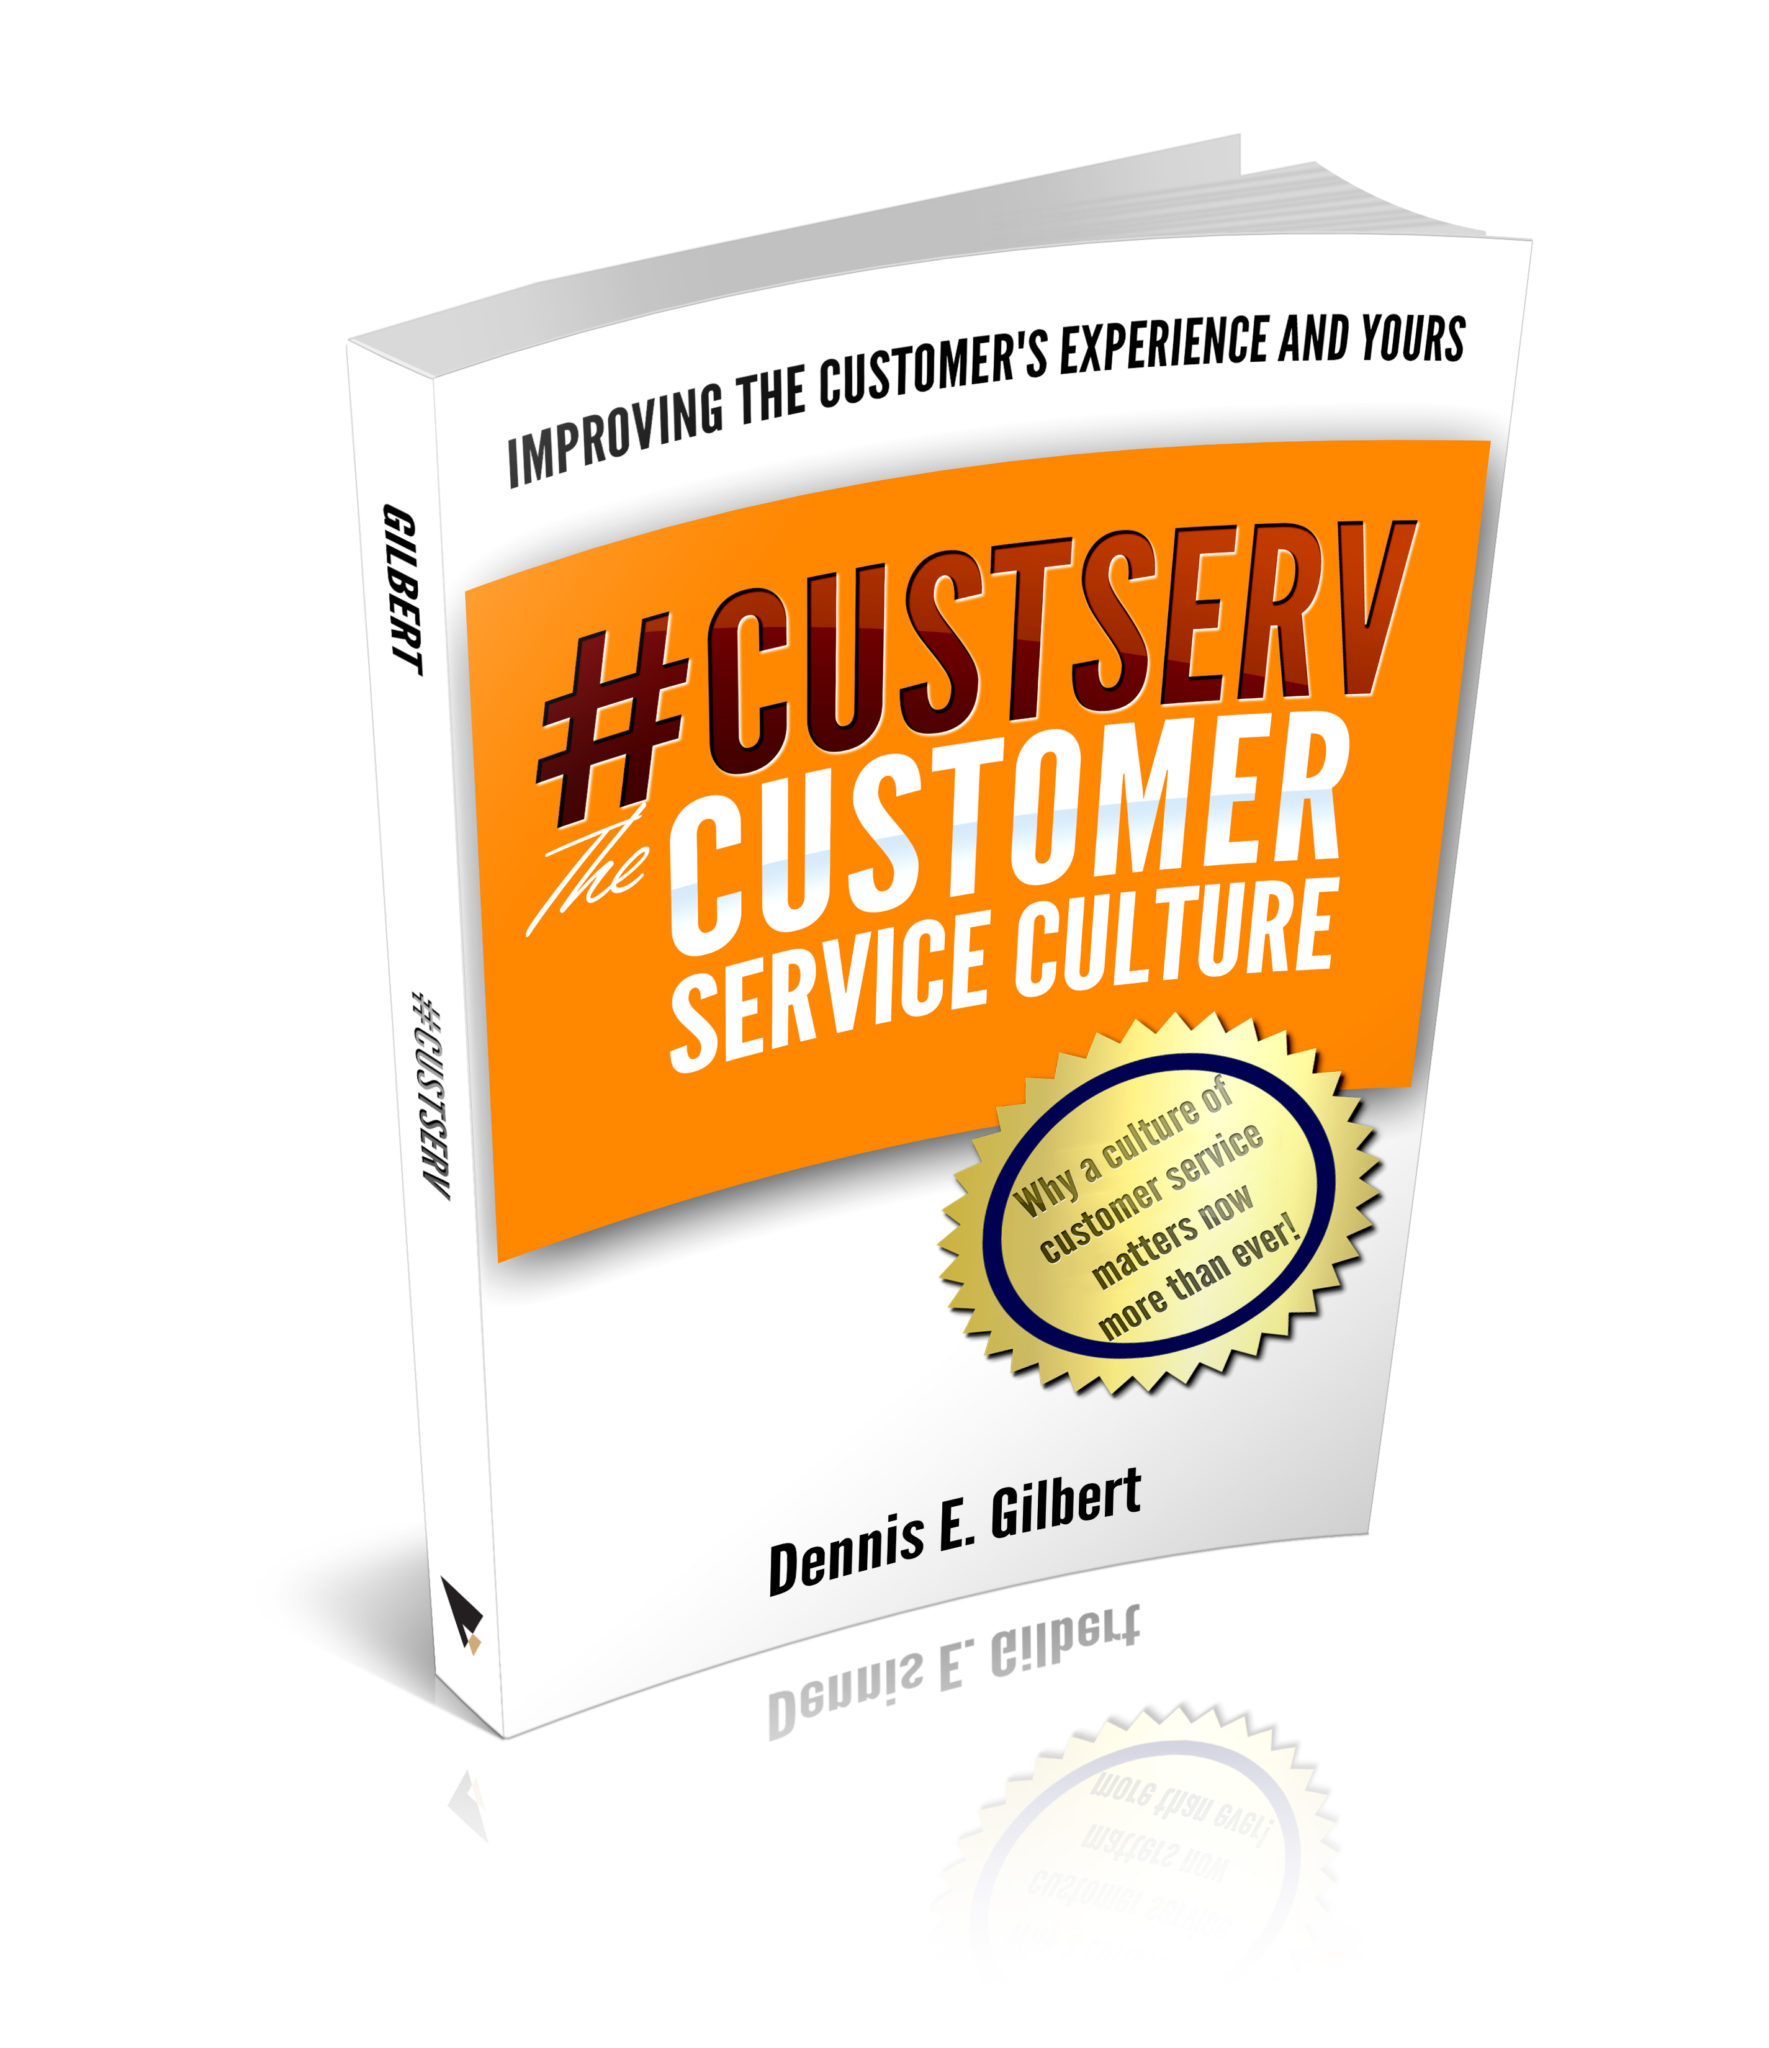 #CustServ Customer Service Culture